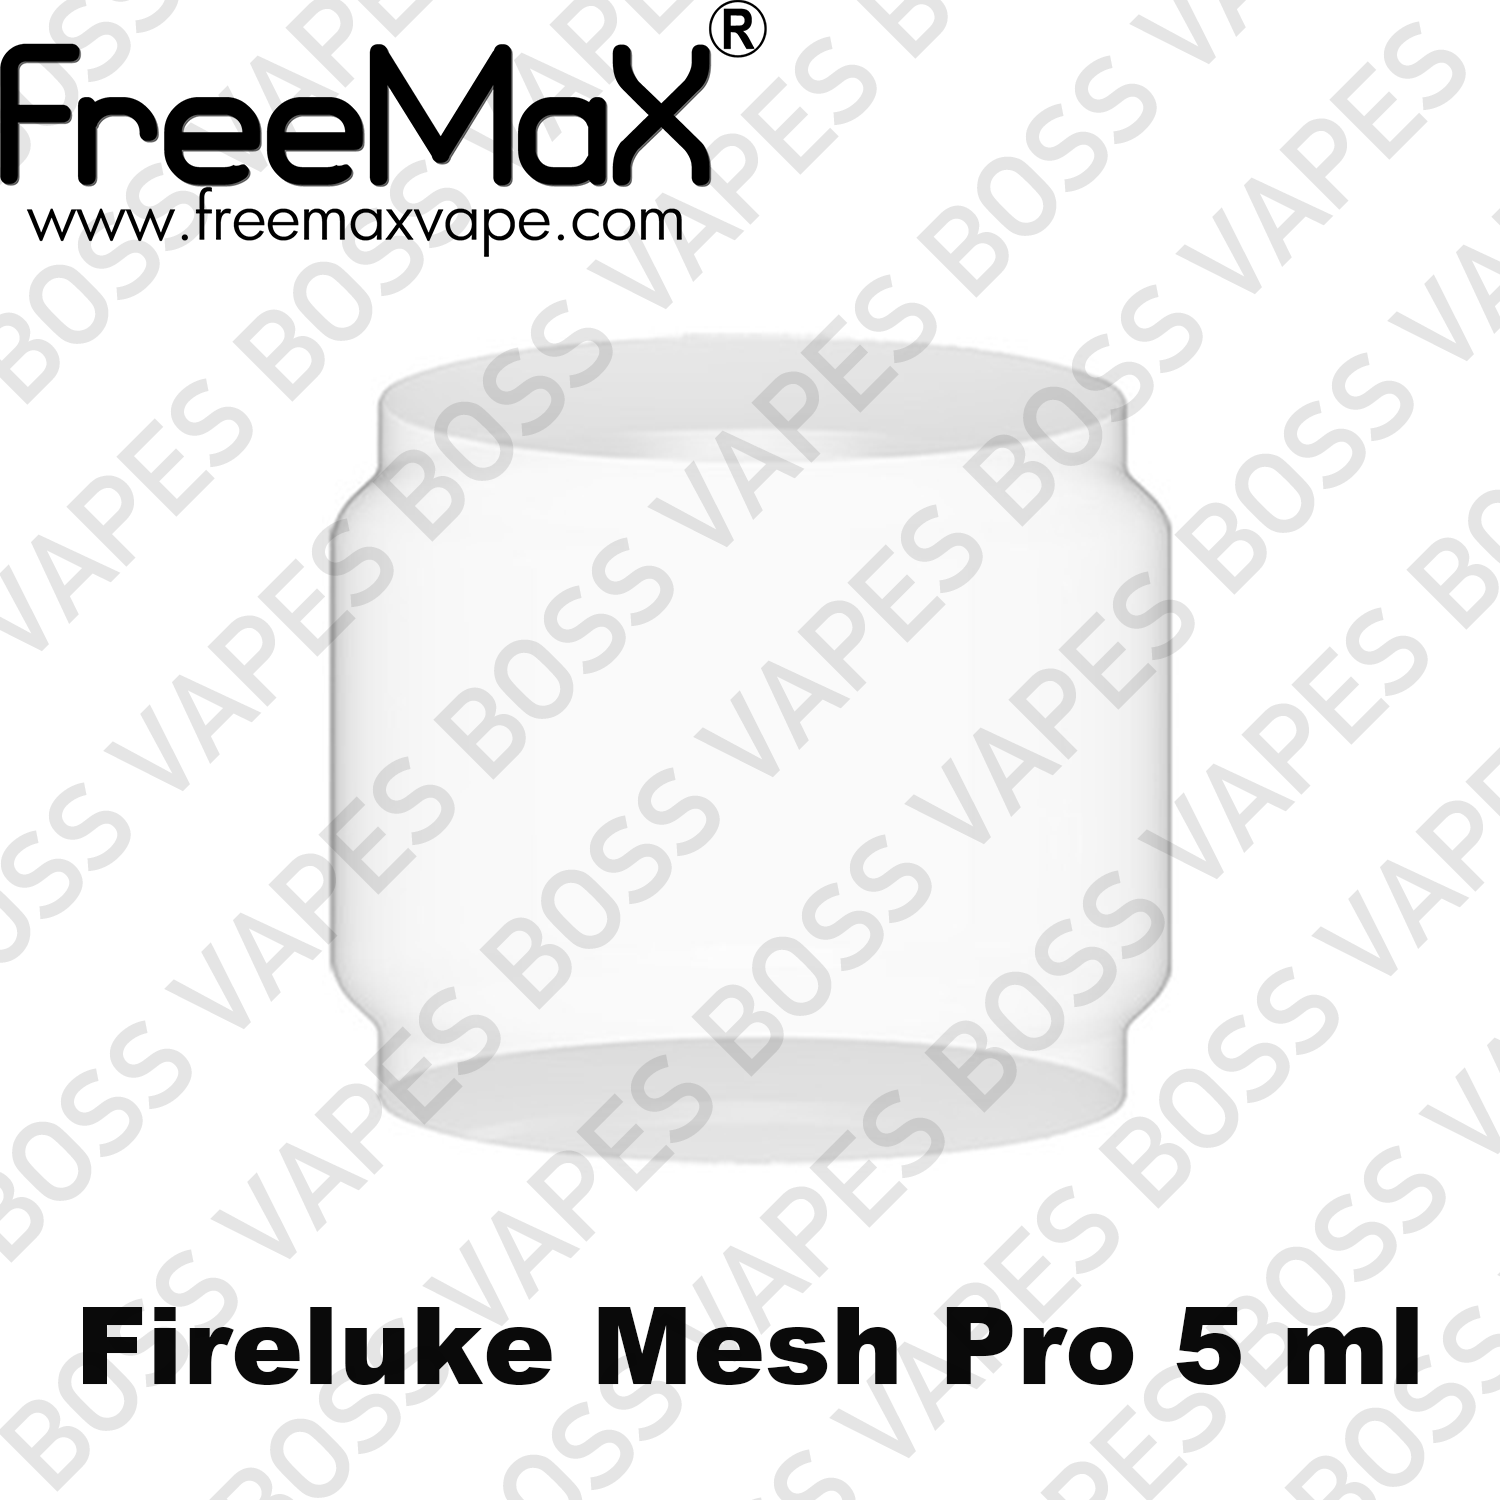 FreeMax Replacement Glass - Boss Vapes